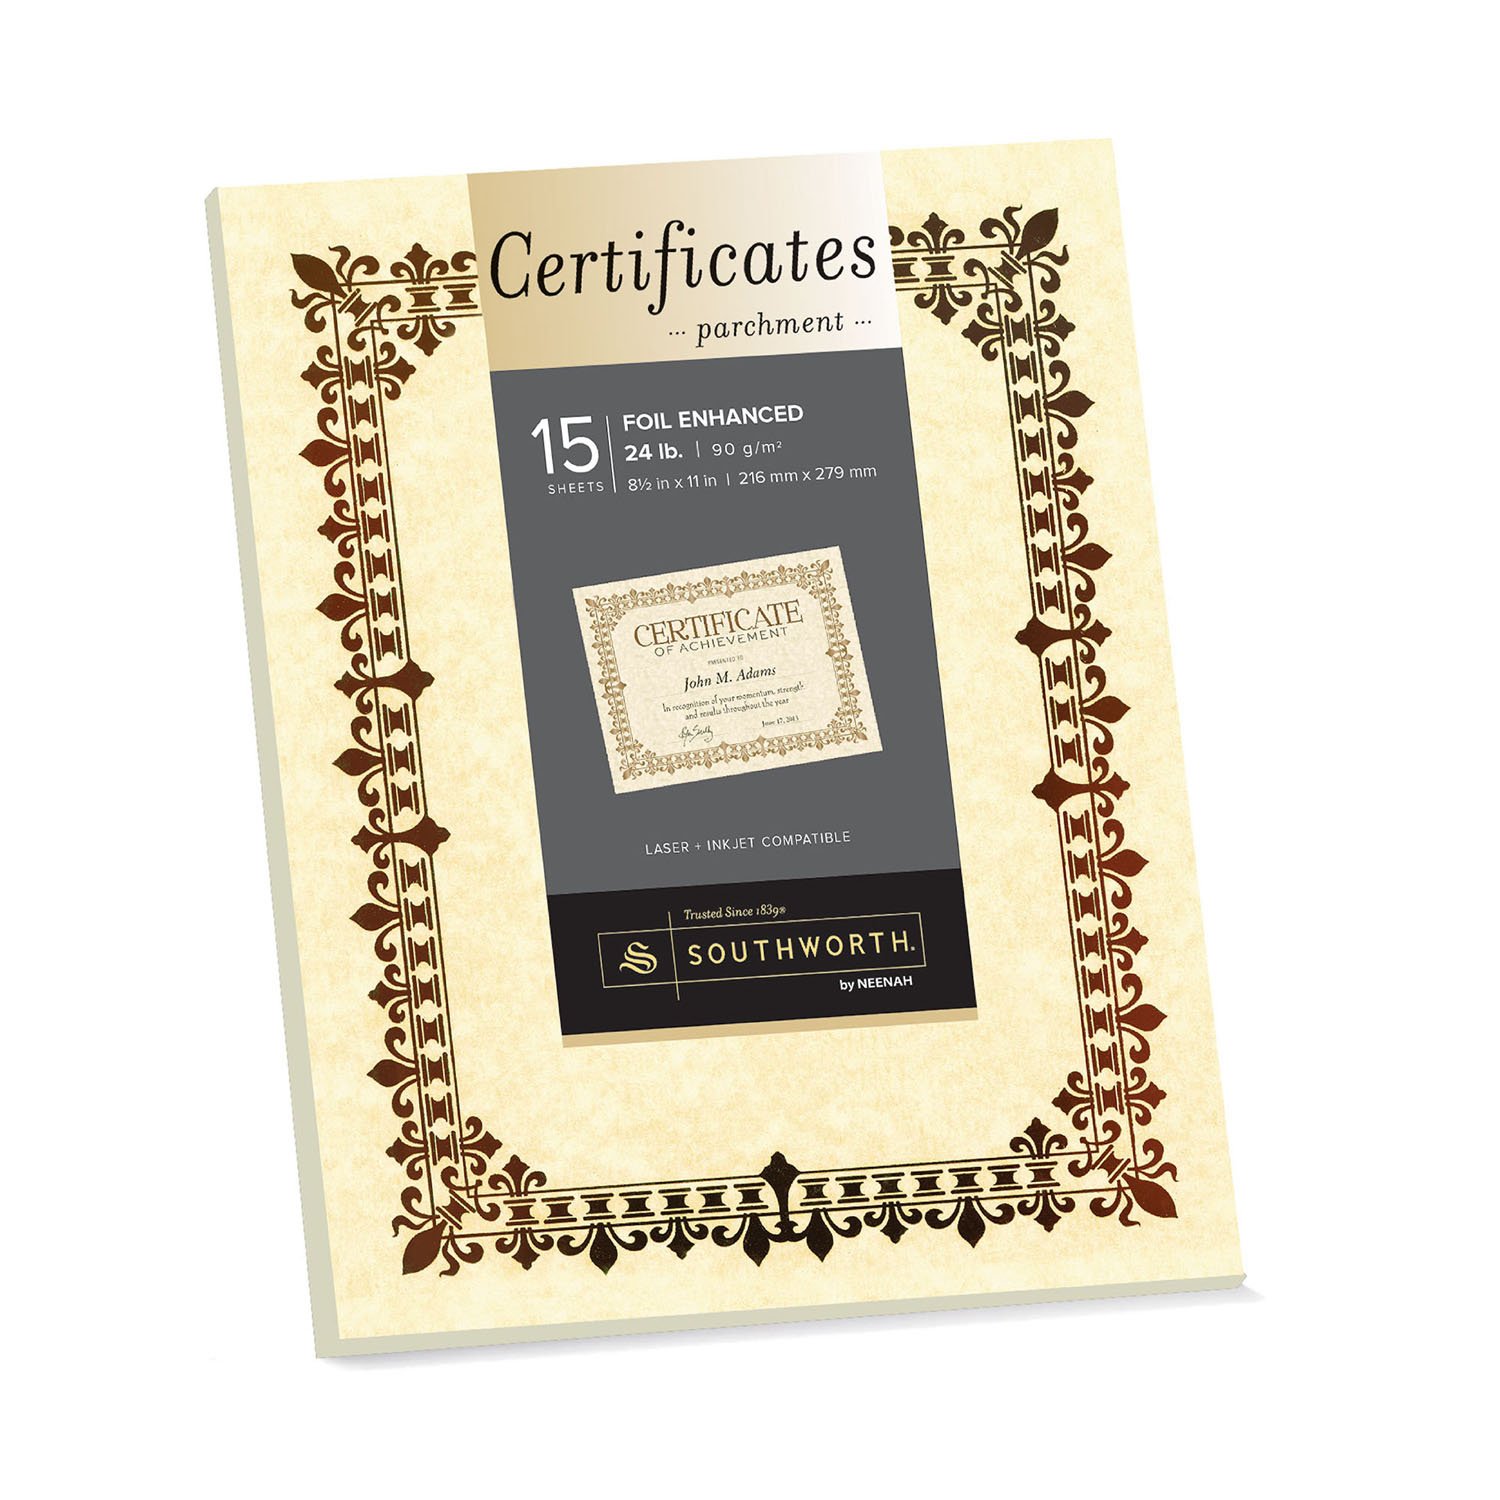 Southworth Foil Enhanced Parchment Certificate, 8.5” x 11”, 24 lb/90 GSM, Gold Fleur De Lis Design, Ivory, 15 Count - Packaging May Vary (98867)